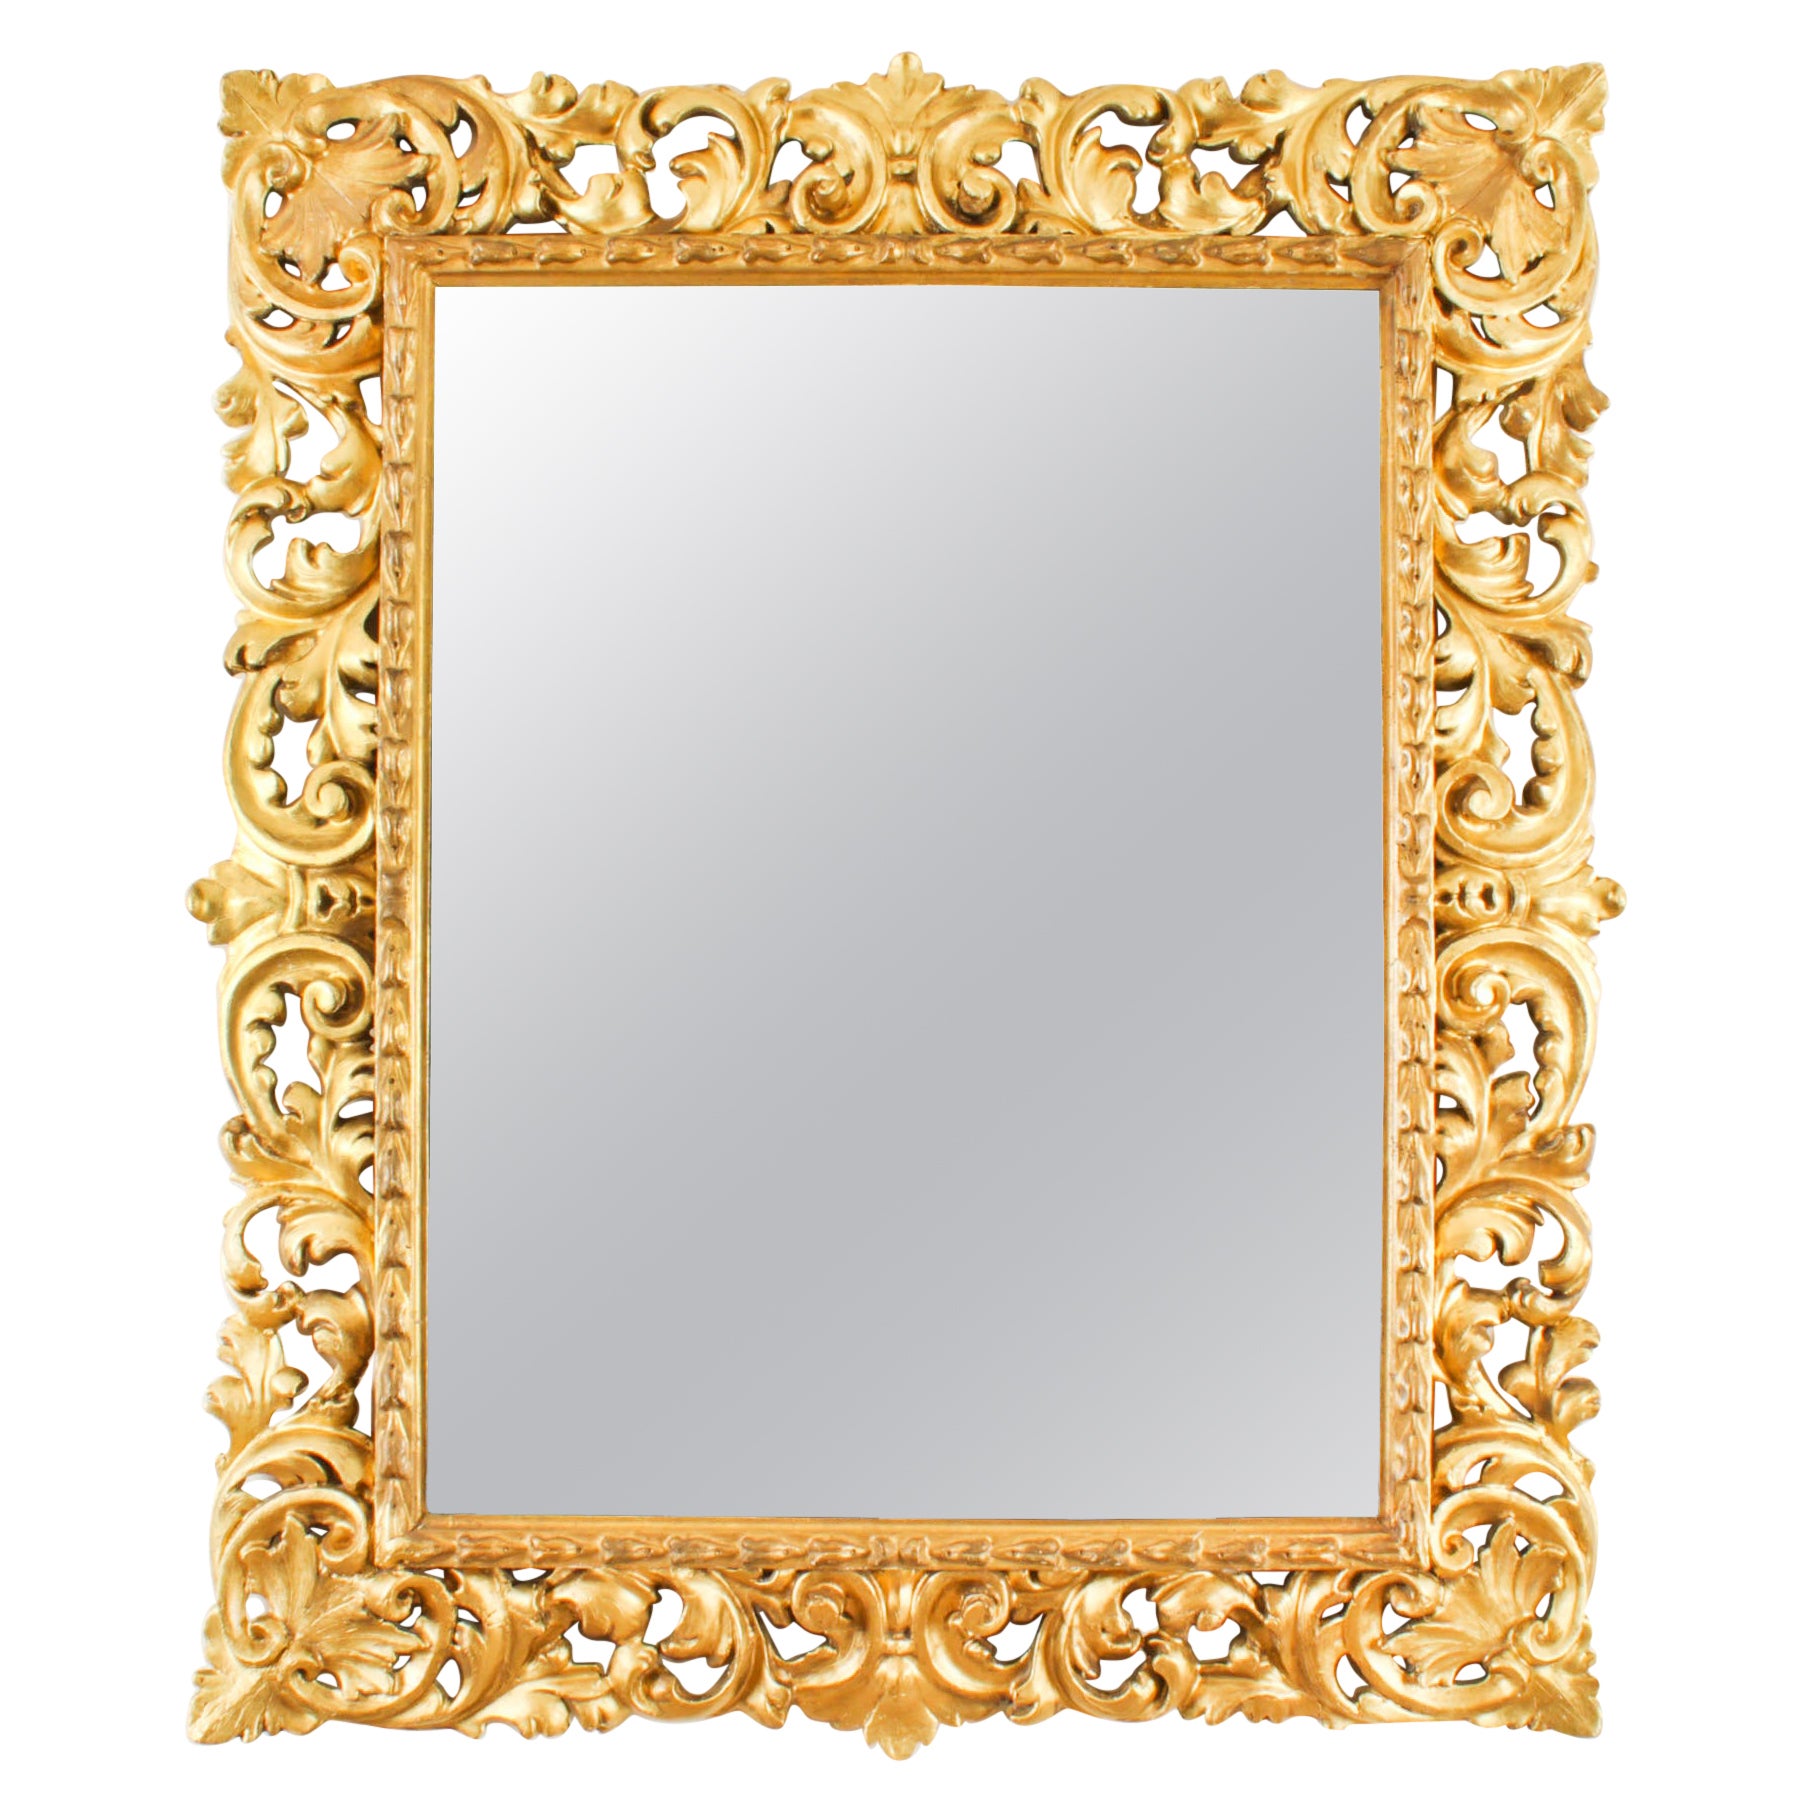 Antique Italian Giltwood Florentine Overmantle Mirror 19th Century For Sale